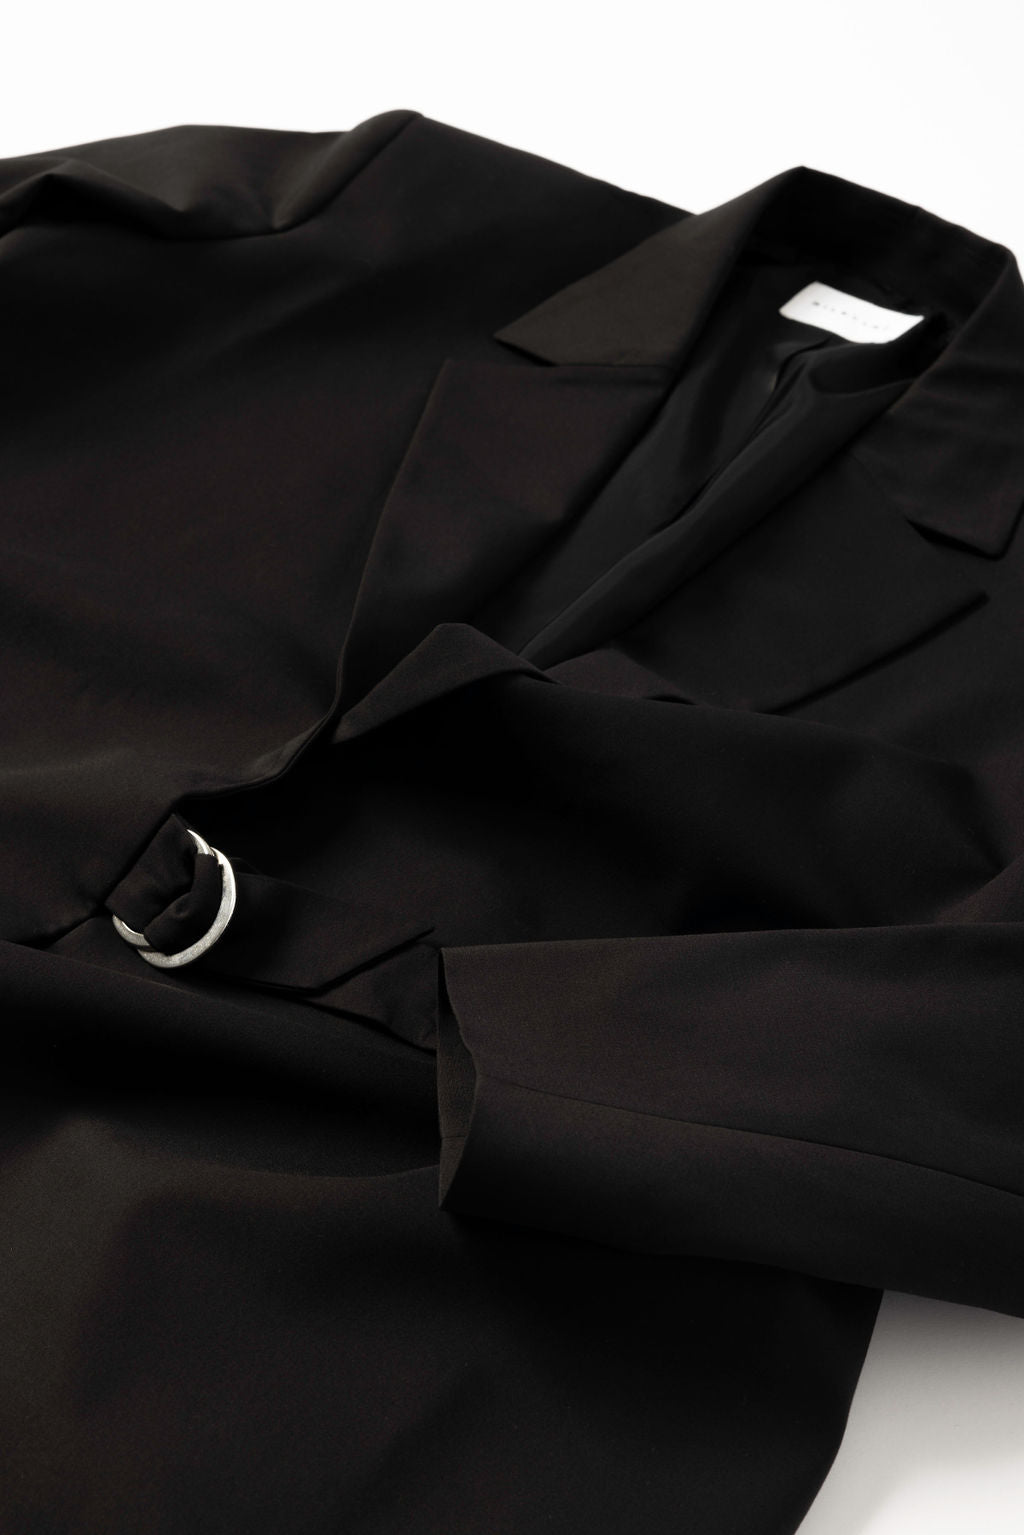 Minimalist Capsule Wardrobe Black Blazer Details and Belt